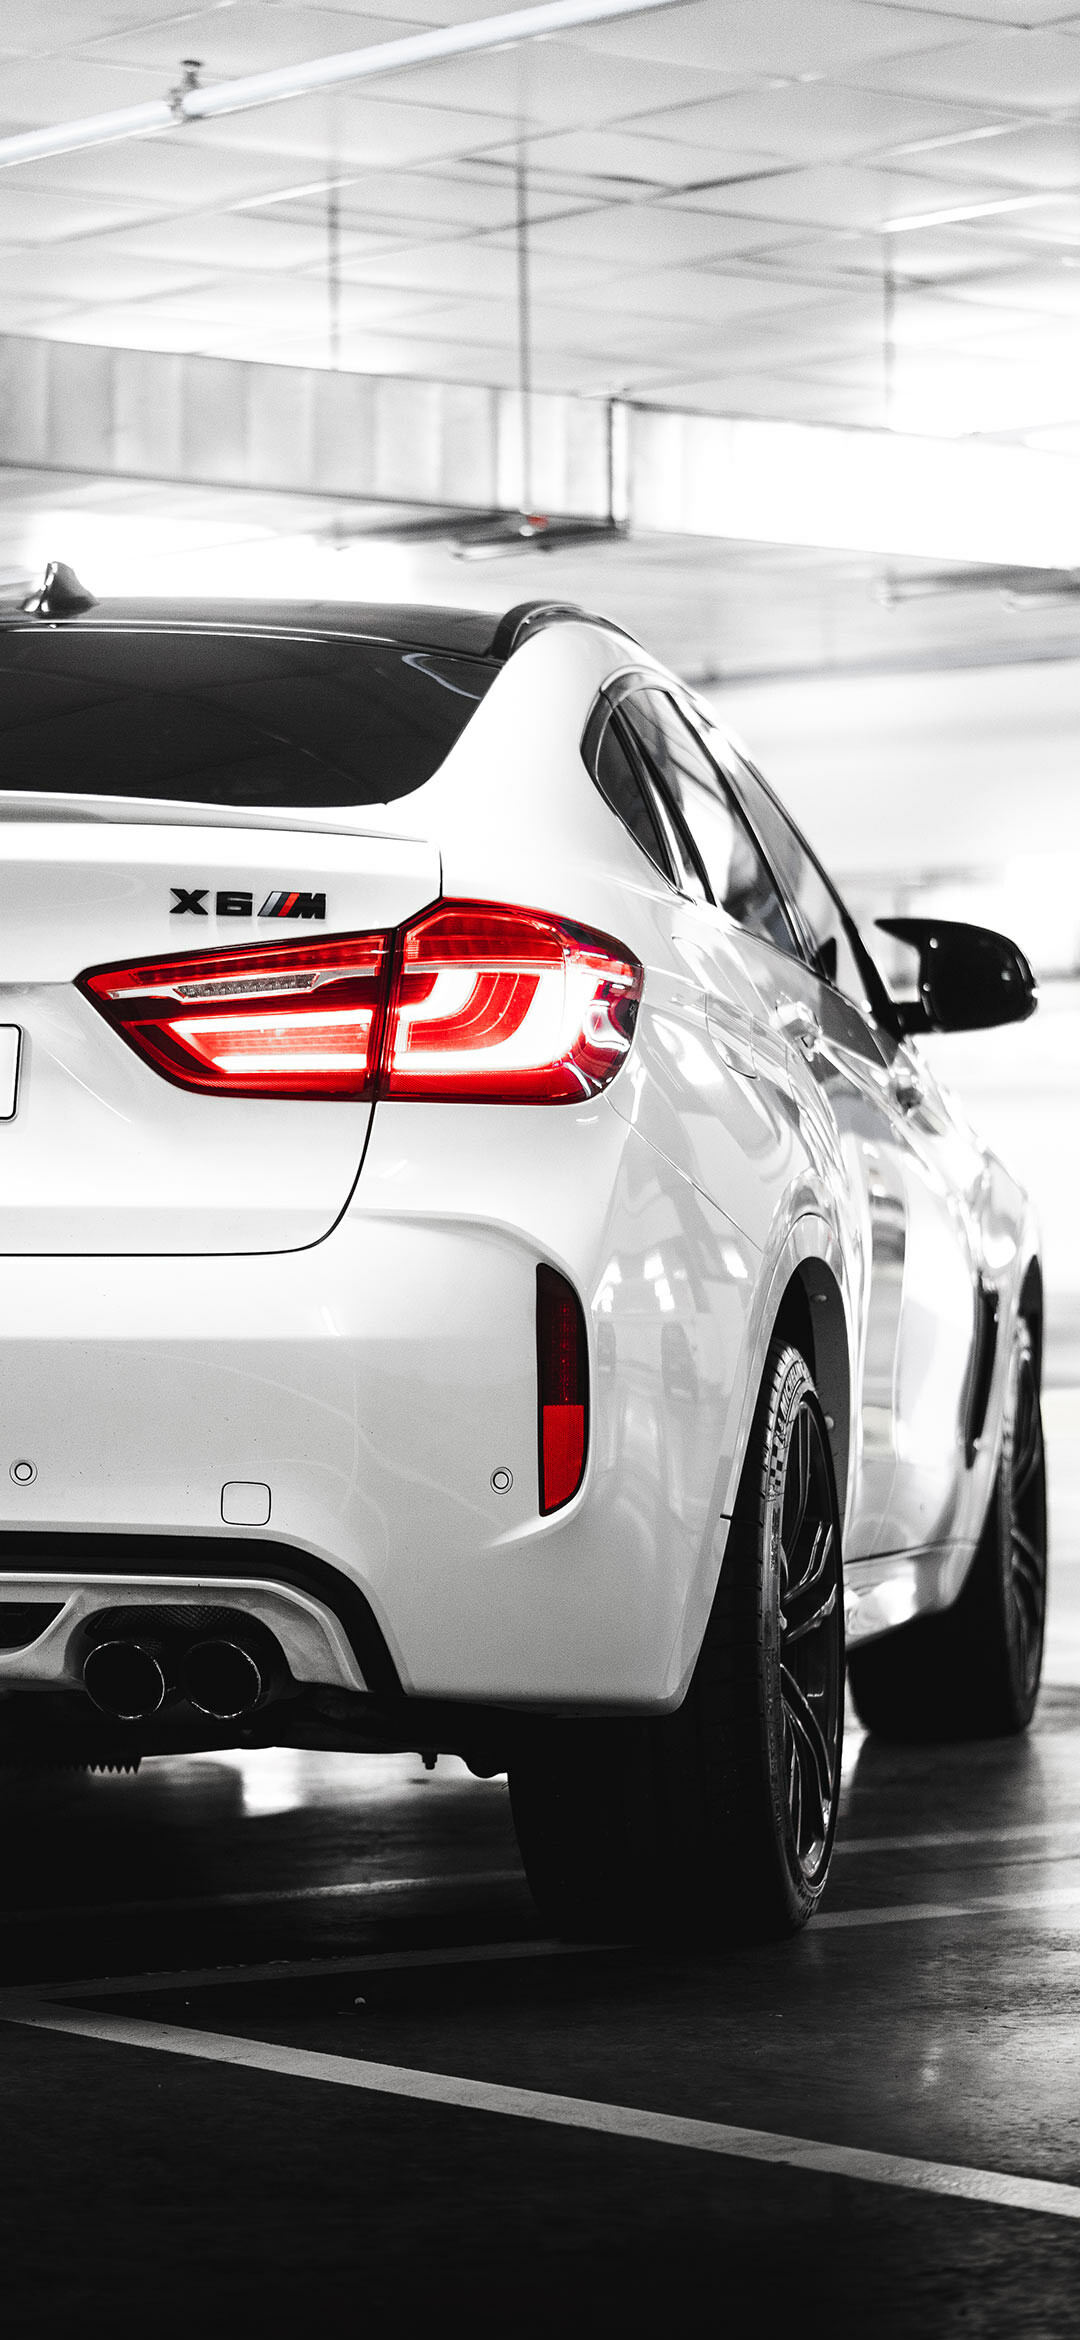 BMW: A German automotive manufacturer, X6M, A high-performance sports car. 1080x2340 HD Wallpaper.